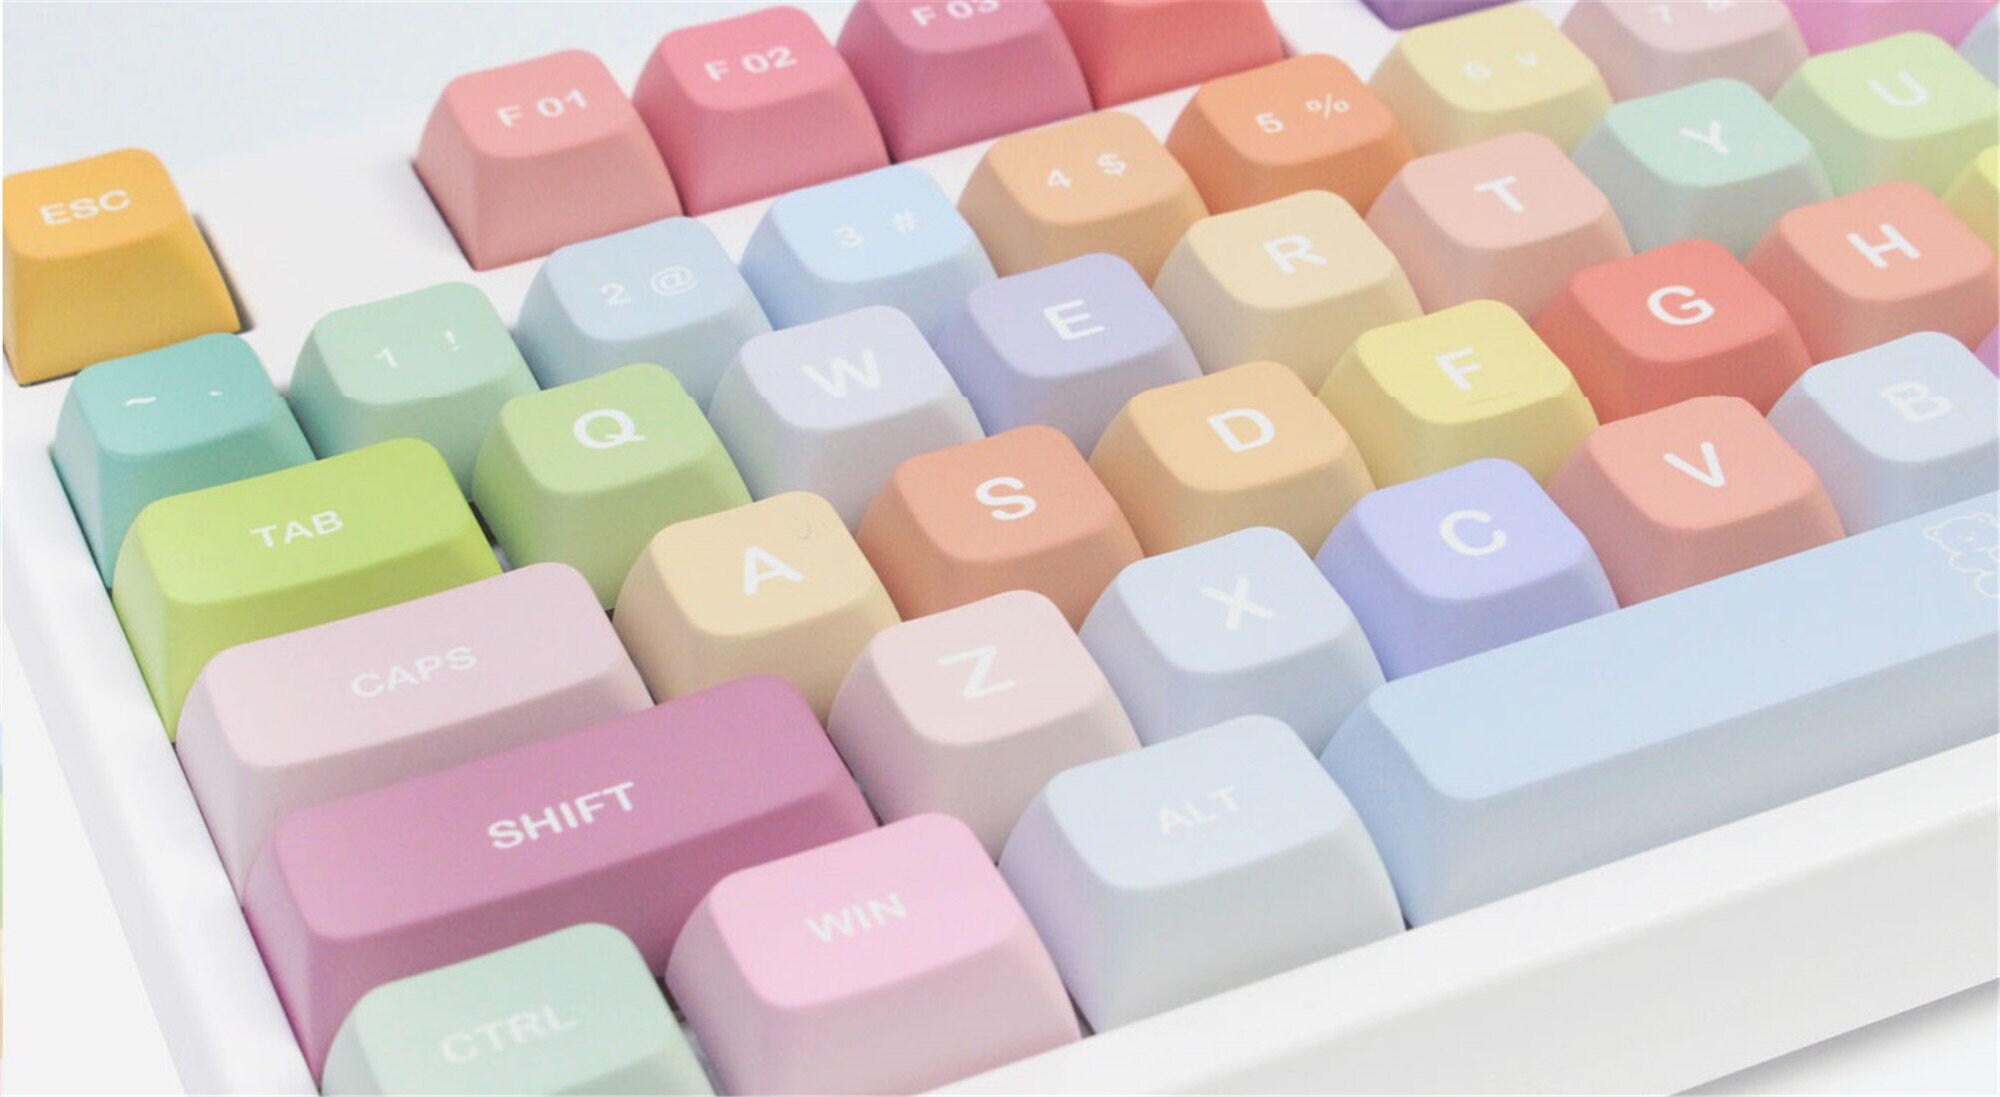 Rainbow LV (Wallpapers) (Colorkeyboard) (Go Keyboard)